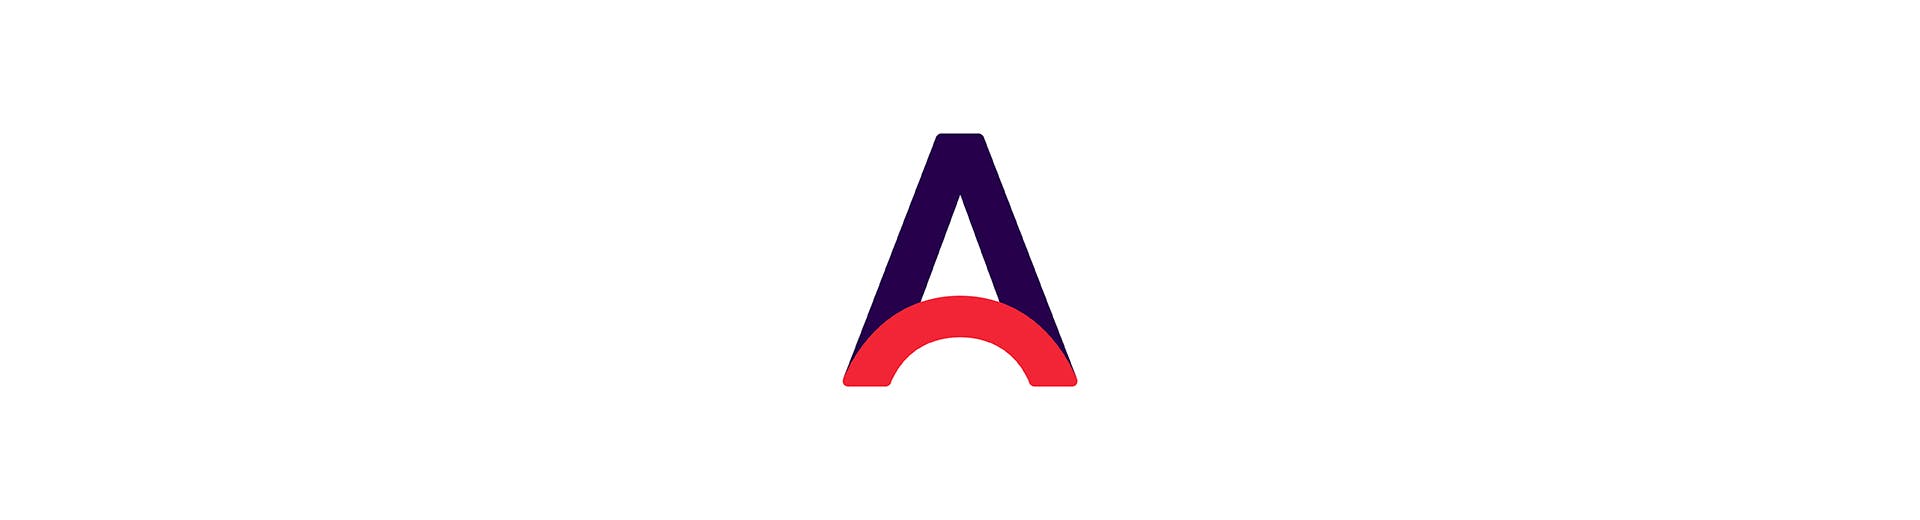 ActivAsia - Coda Builder_Primary Icon.jpg